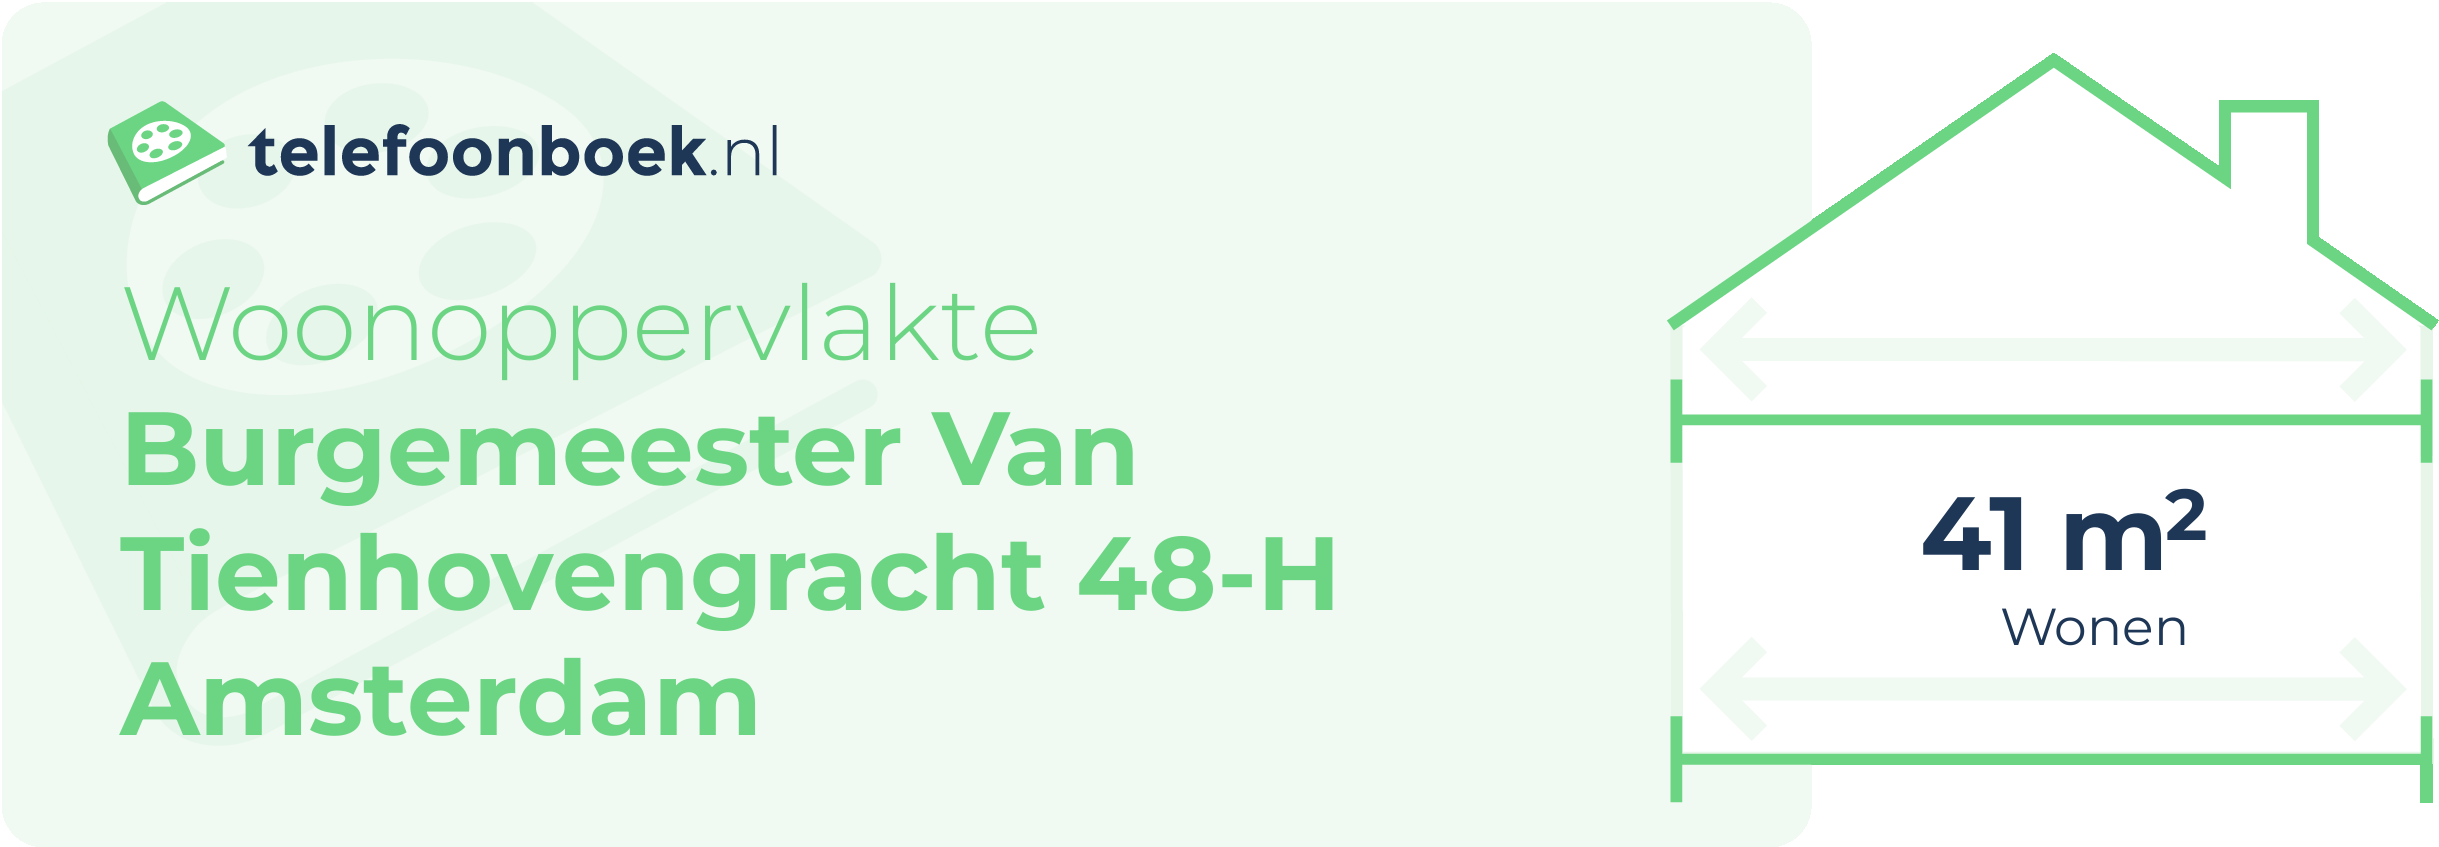 Woonoppervlakte Burgemeester Van Tienhovengracht 48-H Amsterdam